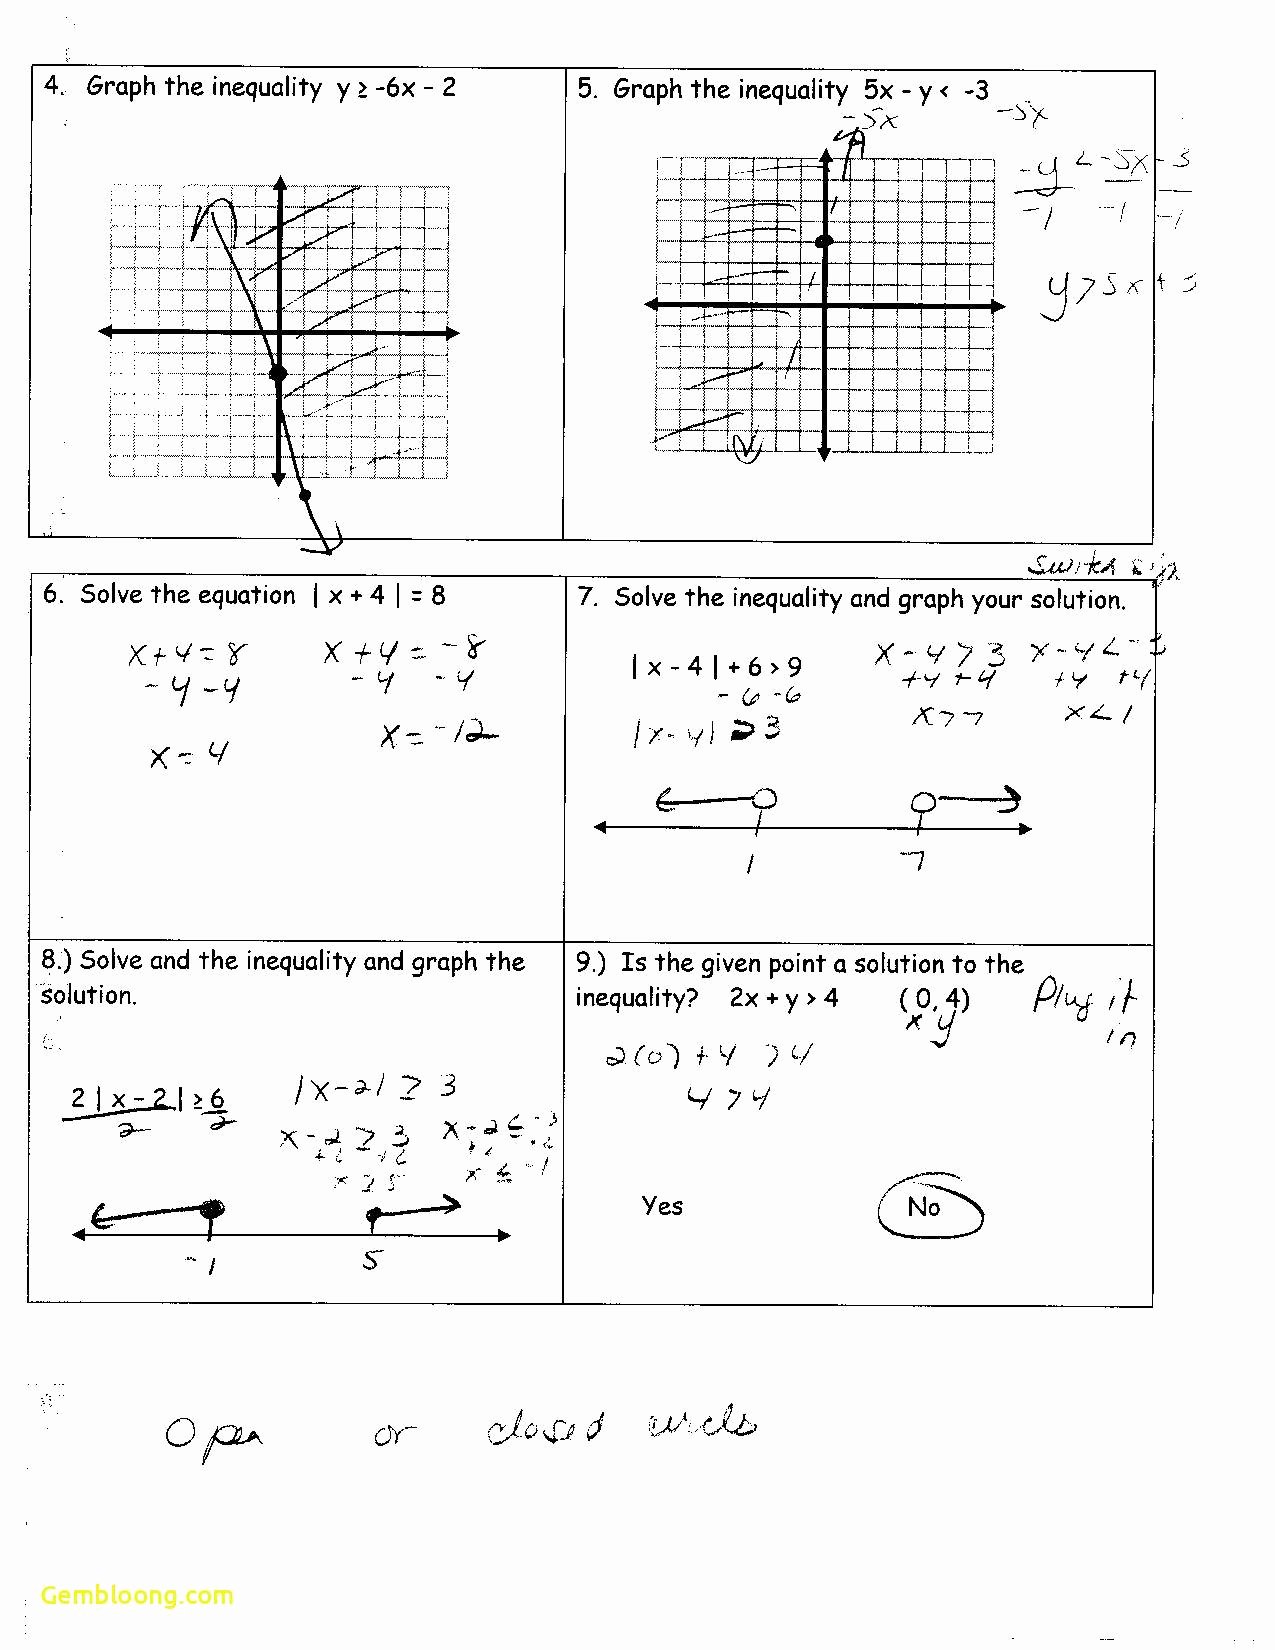 Graphing Quadratics Worksheet Answers Unique Graphing Quadratics Review Worksheet Answers